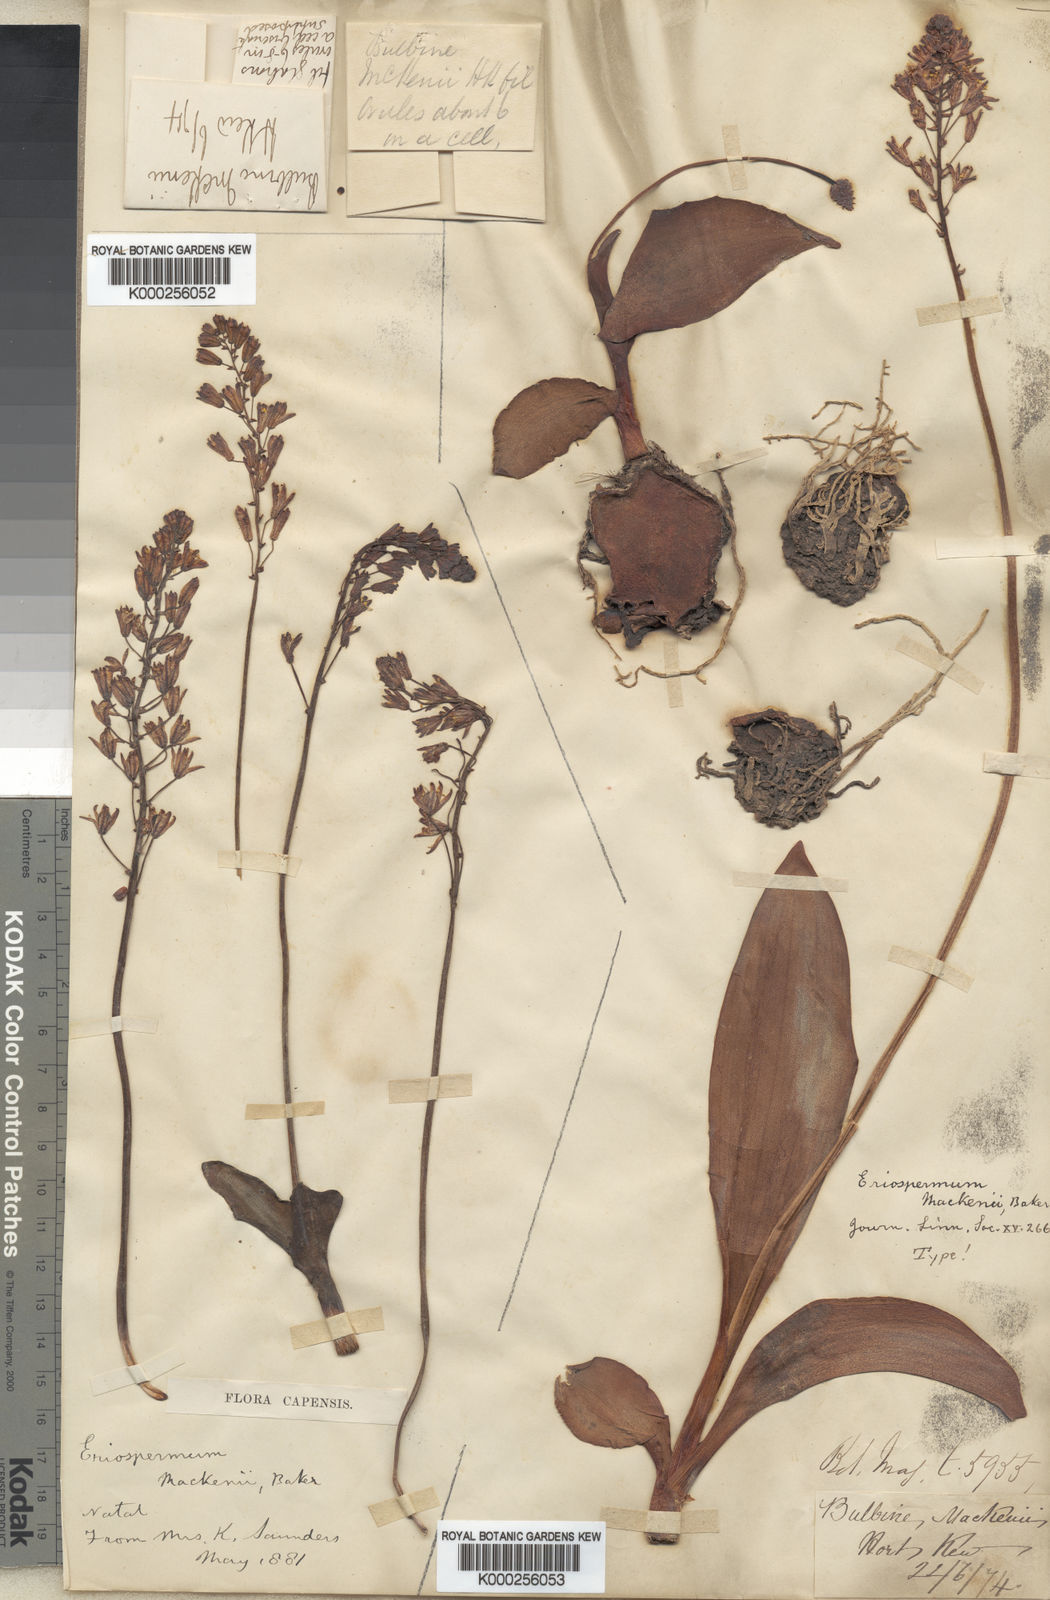 Eriospermum mackenii (Hook.f.) Baker | Plants of the World Online